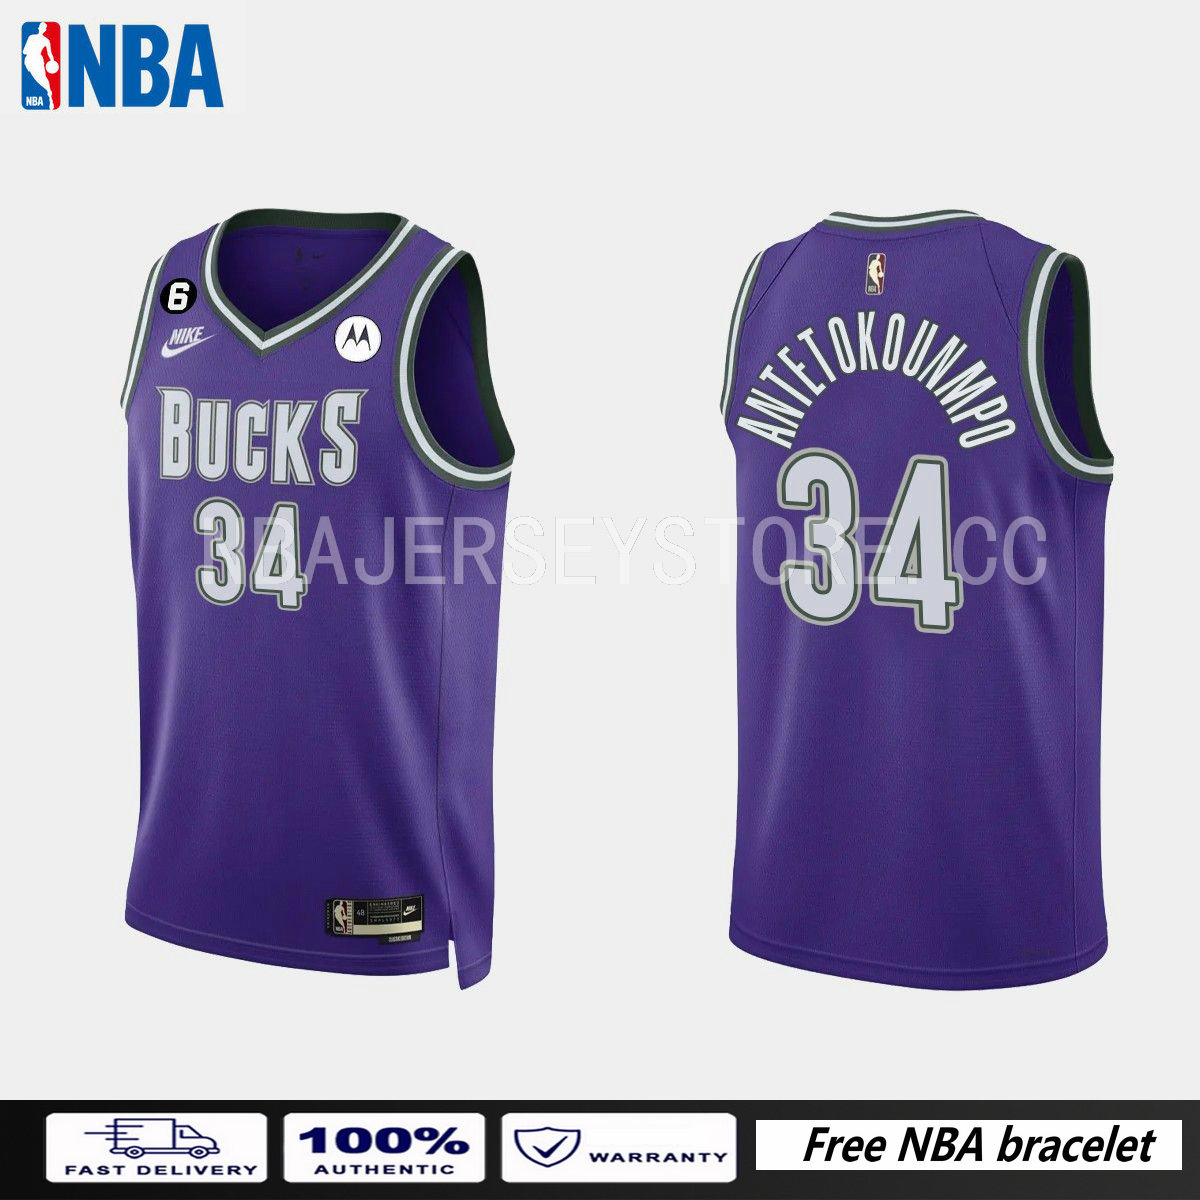 10 styles】NBA jersey Milwaukee Bucks No.34 ANTETOKOUNMPO 2021 Final edition  and other styles basketball jersey